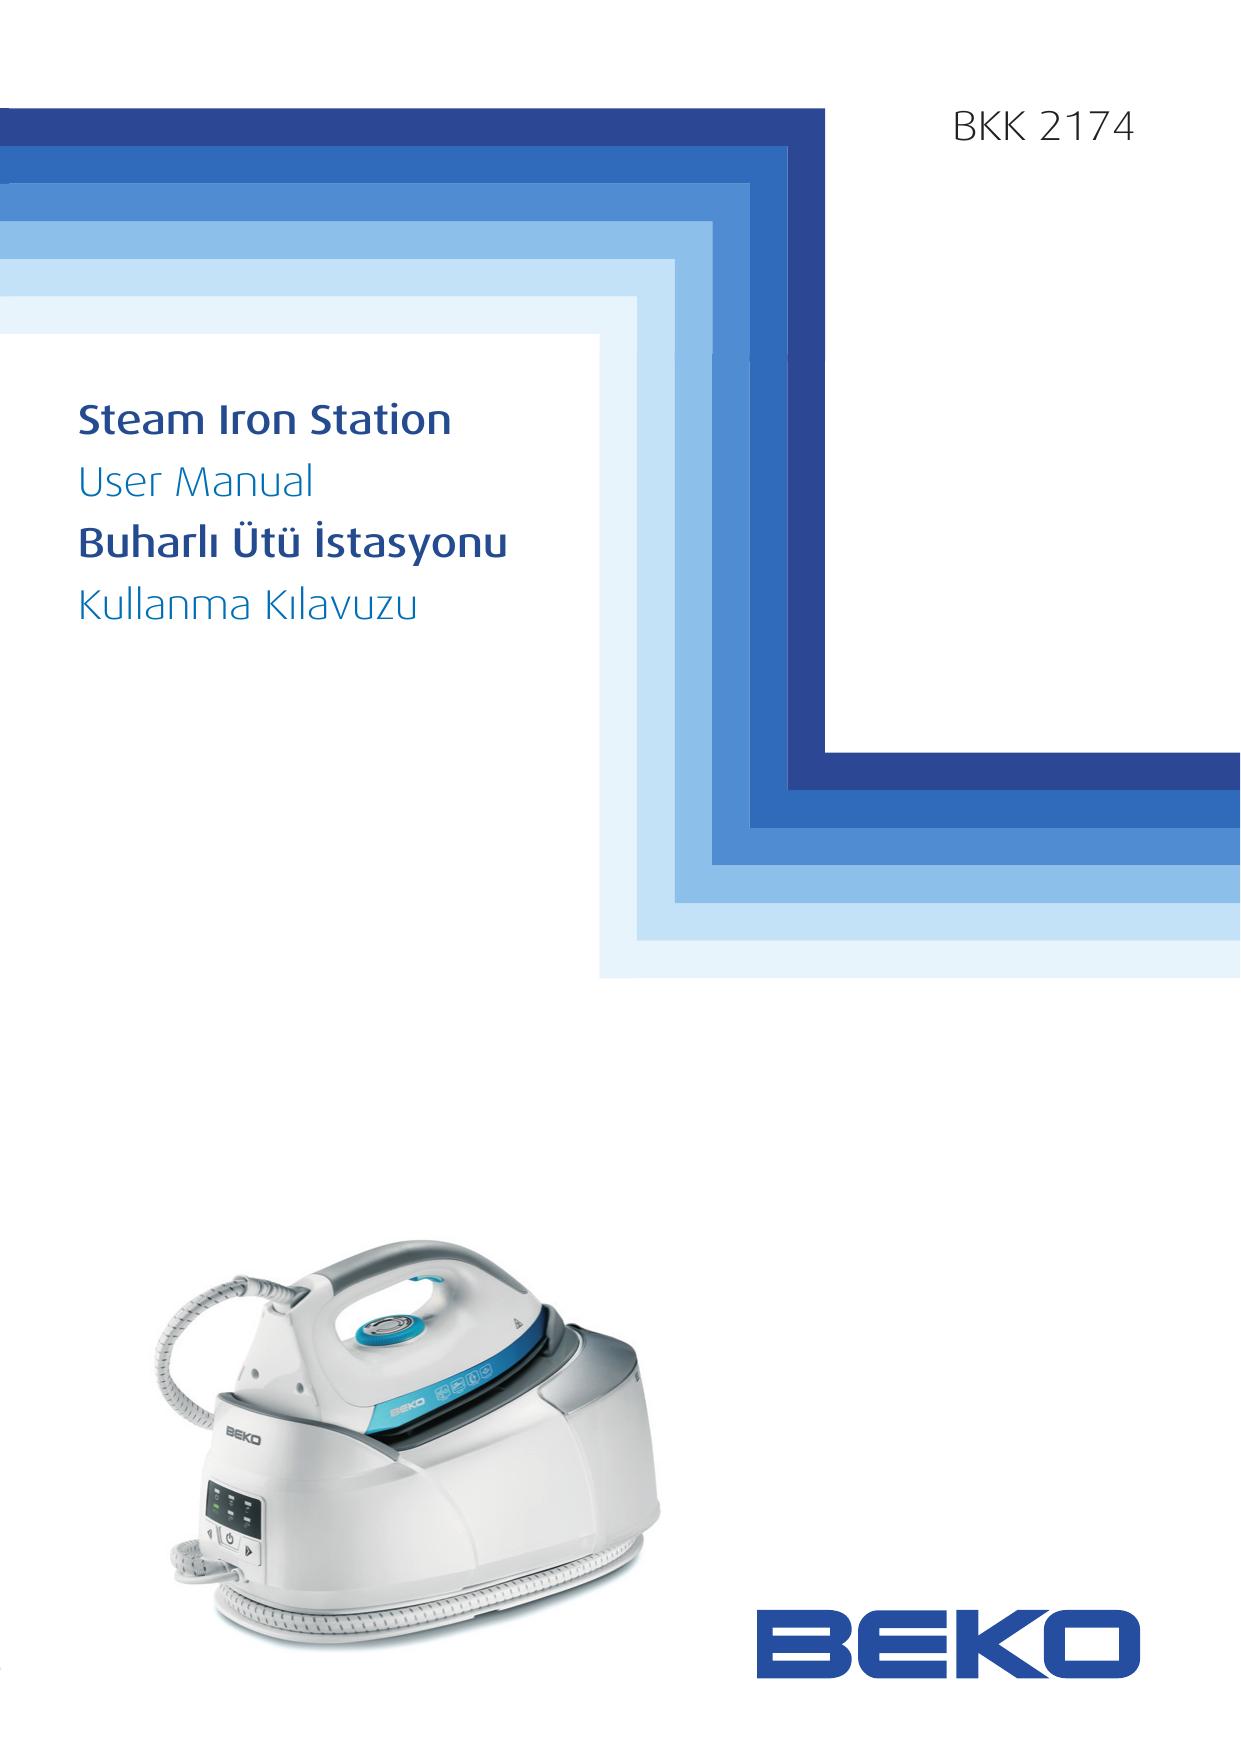 Beko BKK2174 Iron User Manual